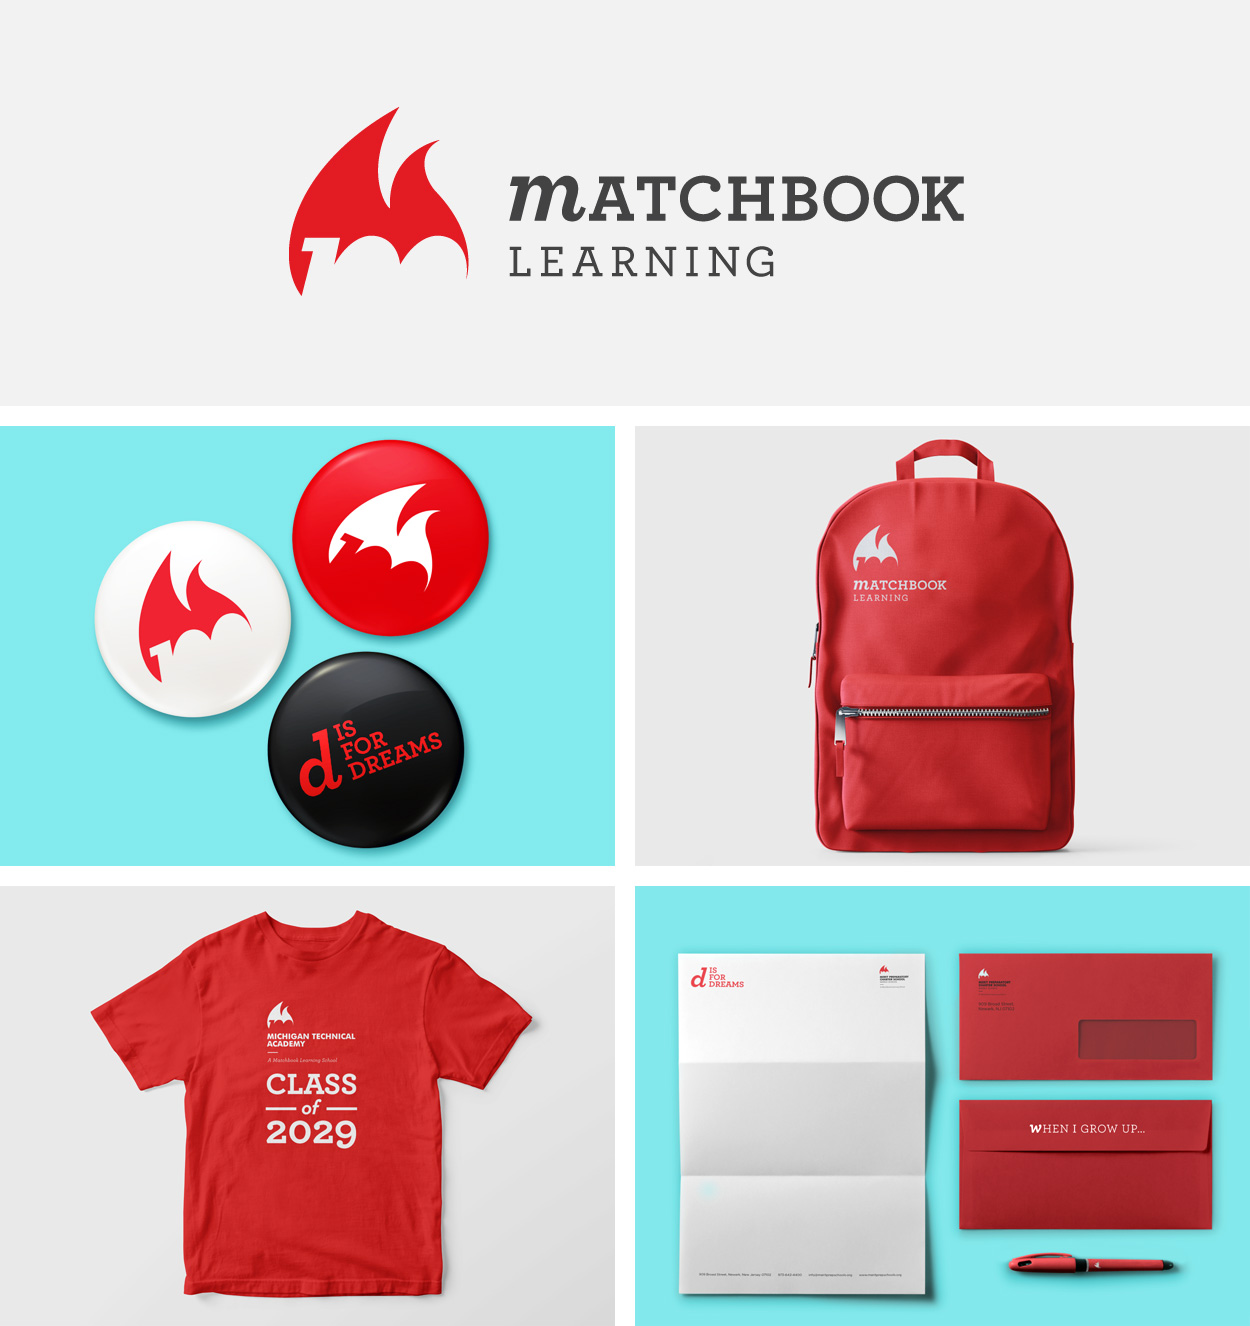 matchbook learning merchandise